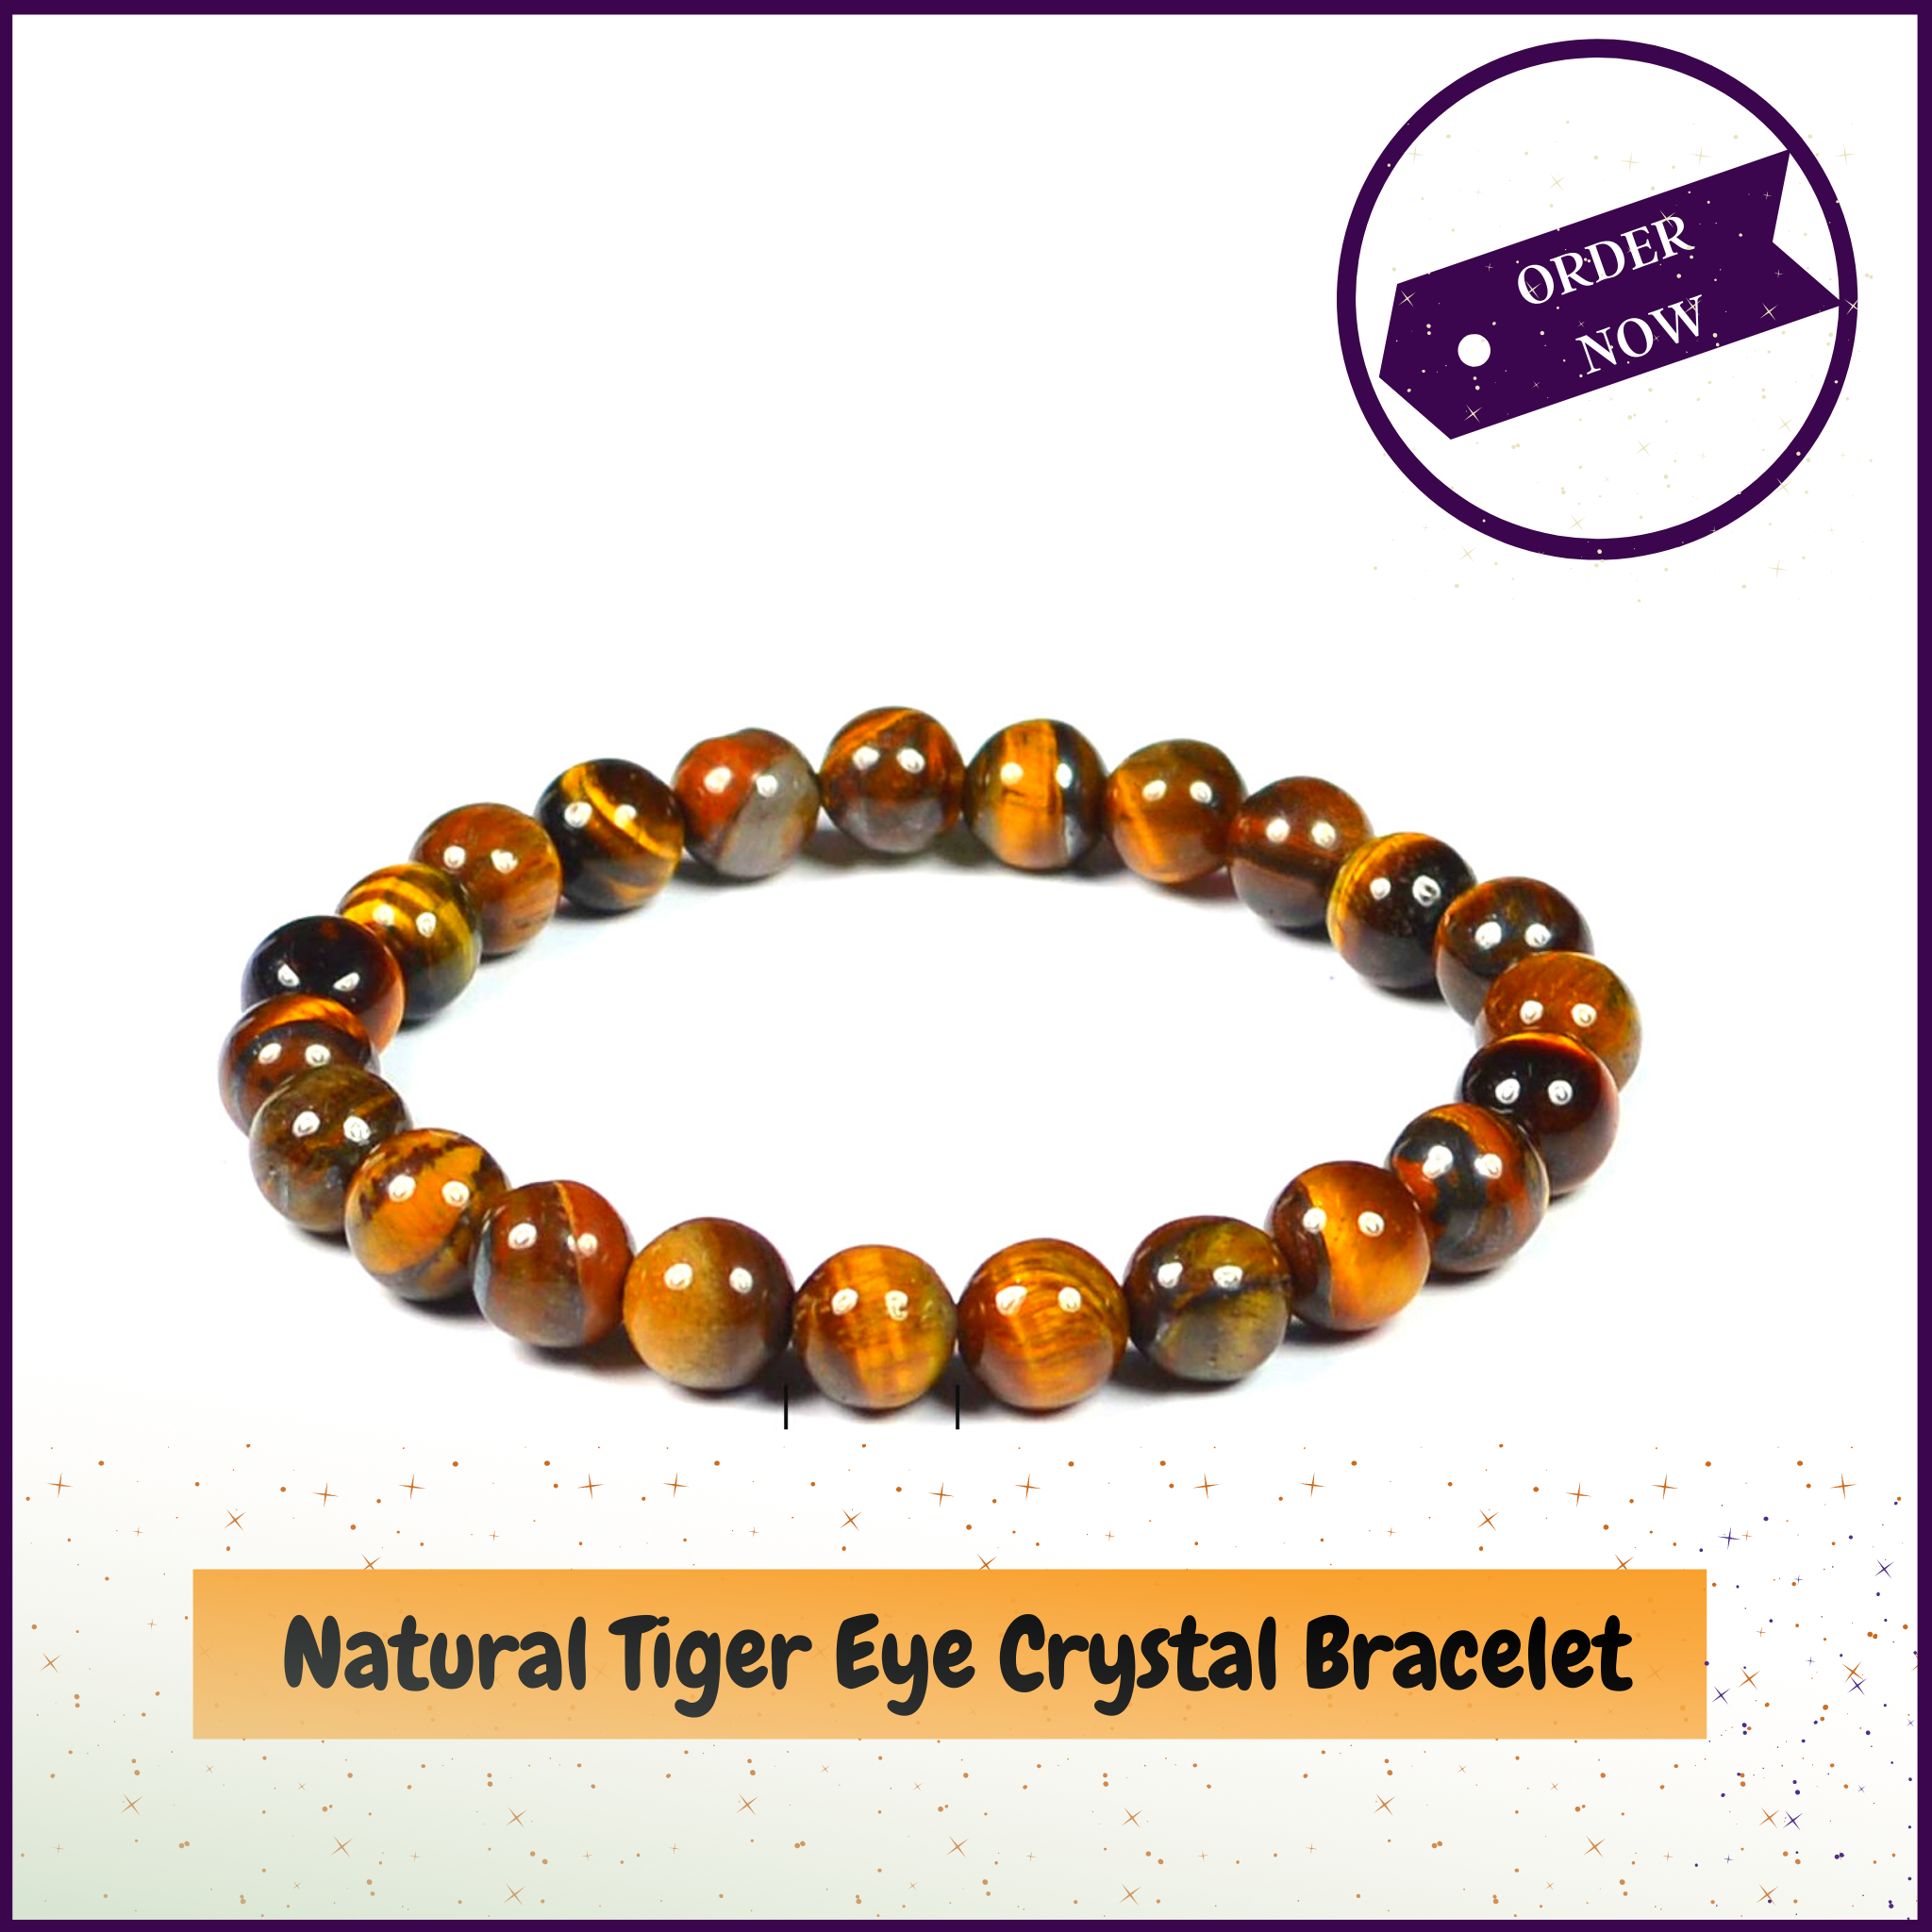 Tiger Eye Crystal Stone Bracelet For Third Eye Activation - 51pyramids